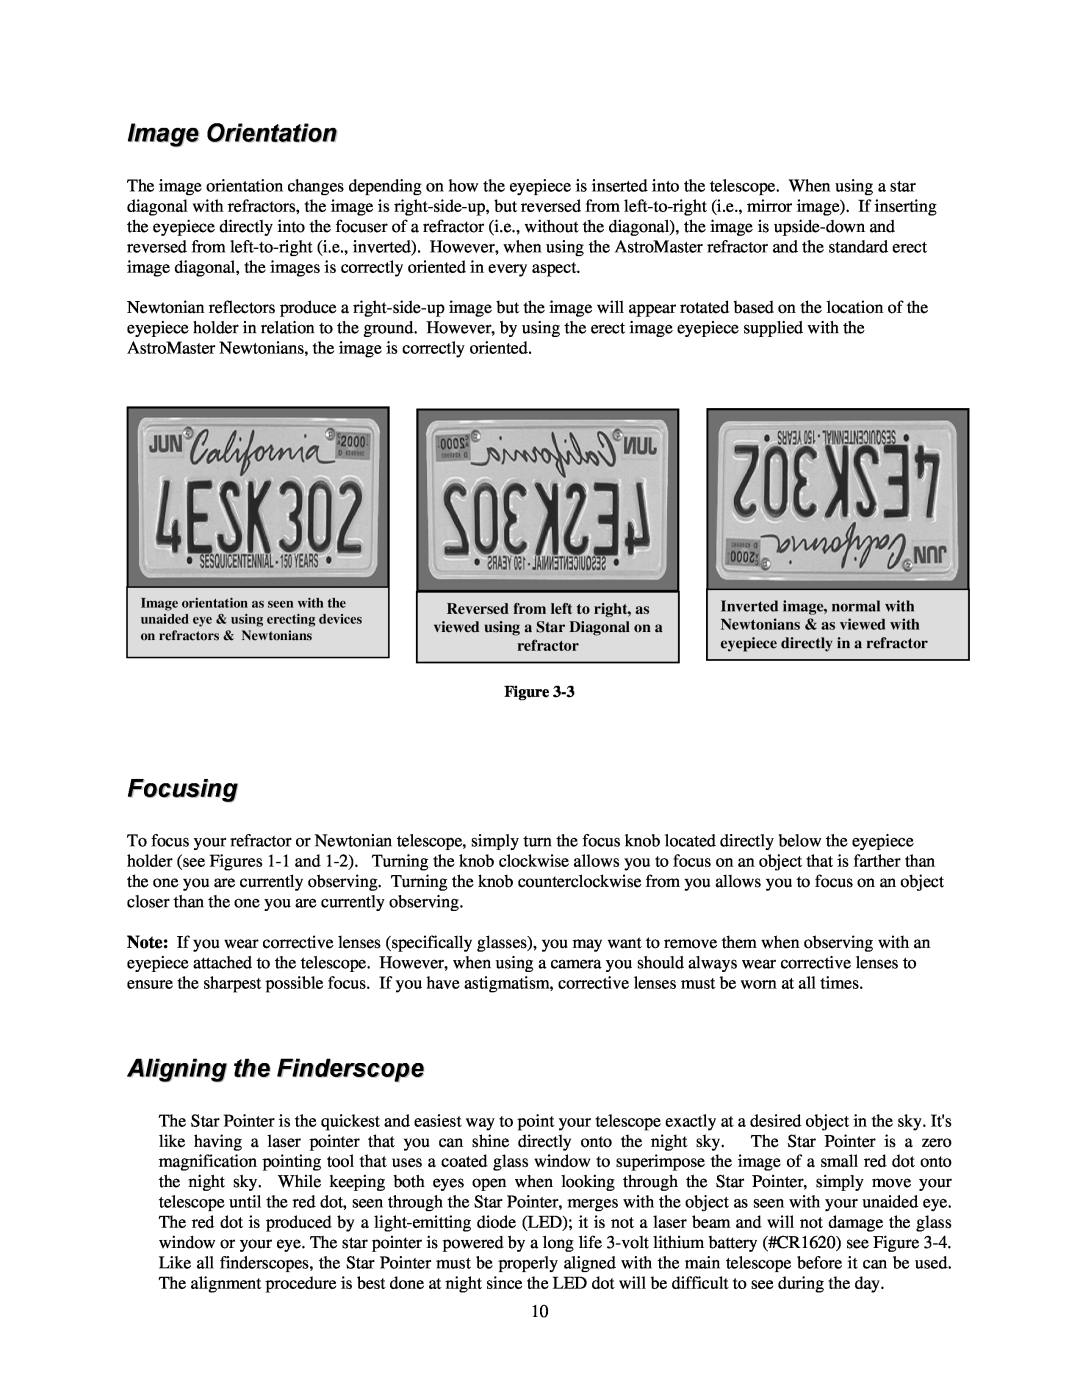 Celestron C21061 manual Image Orientation, Focusing, Aligning the Finderscope 